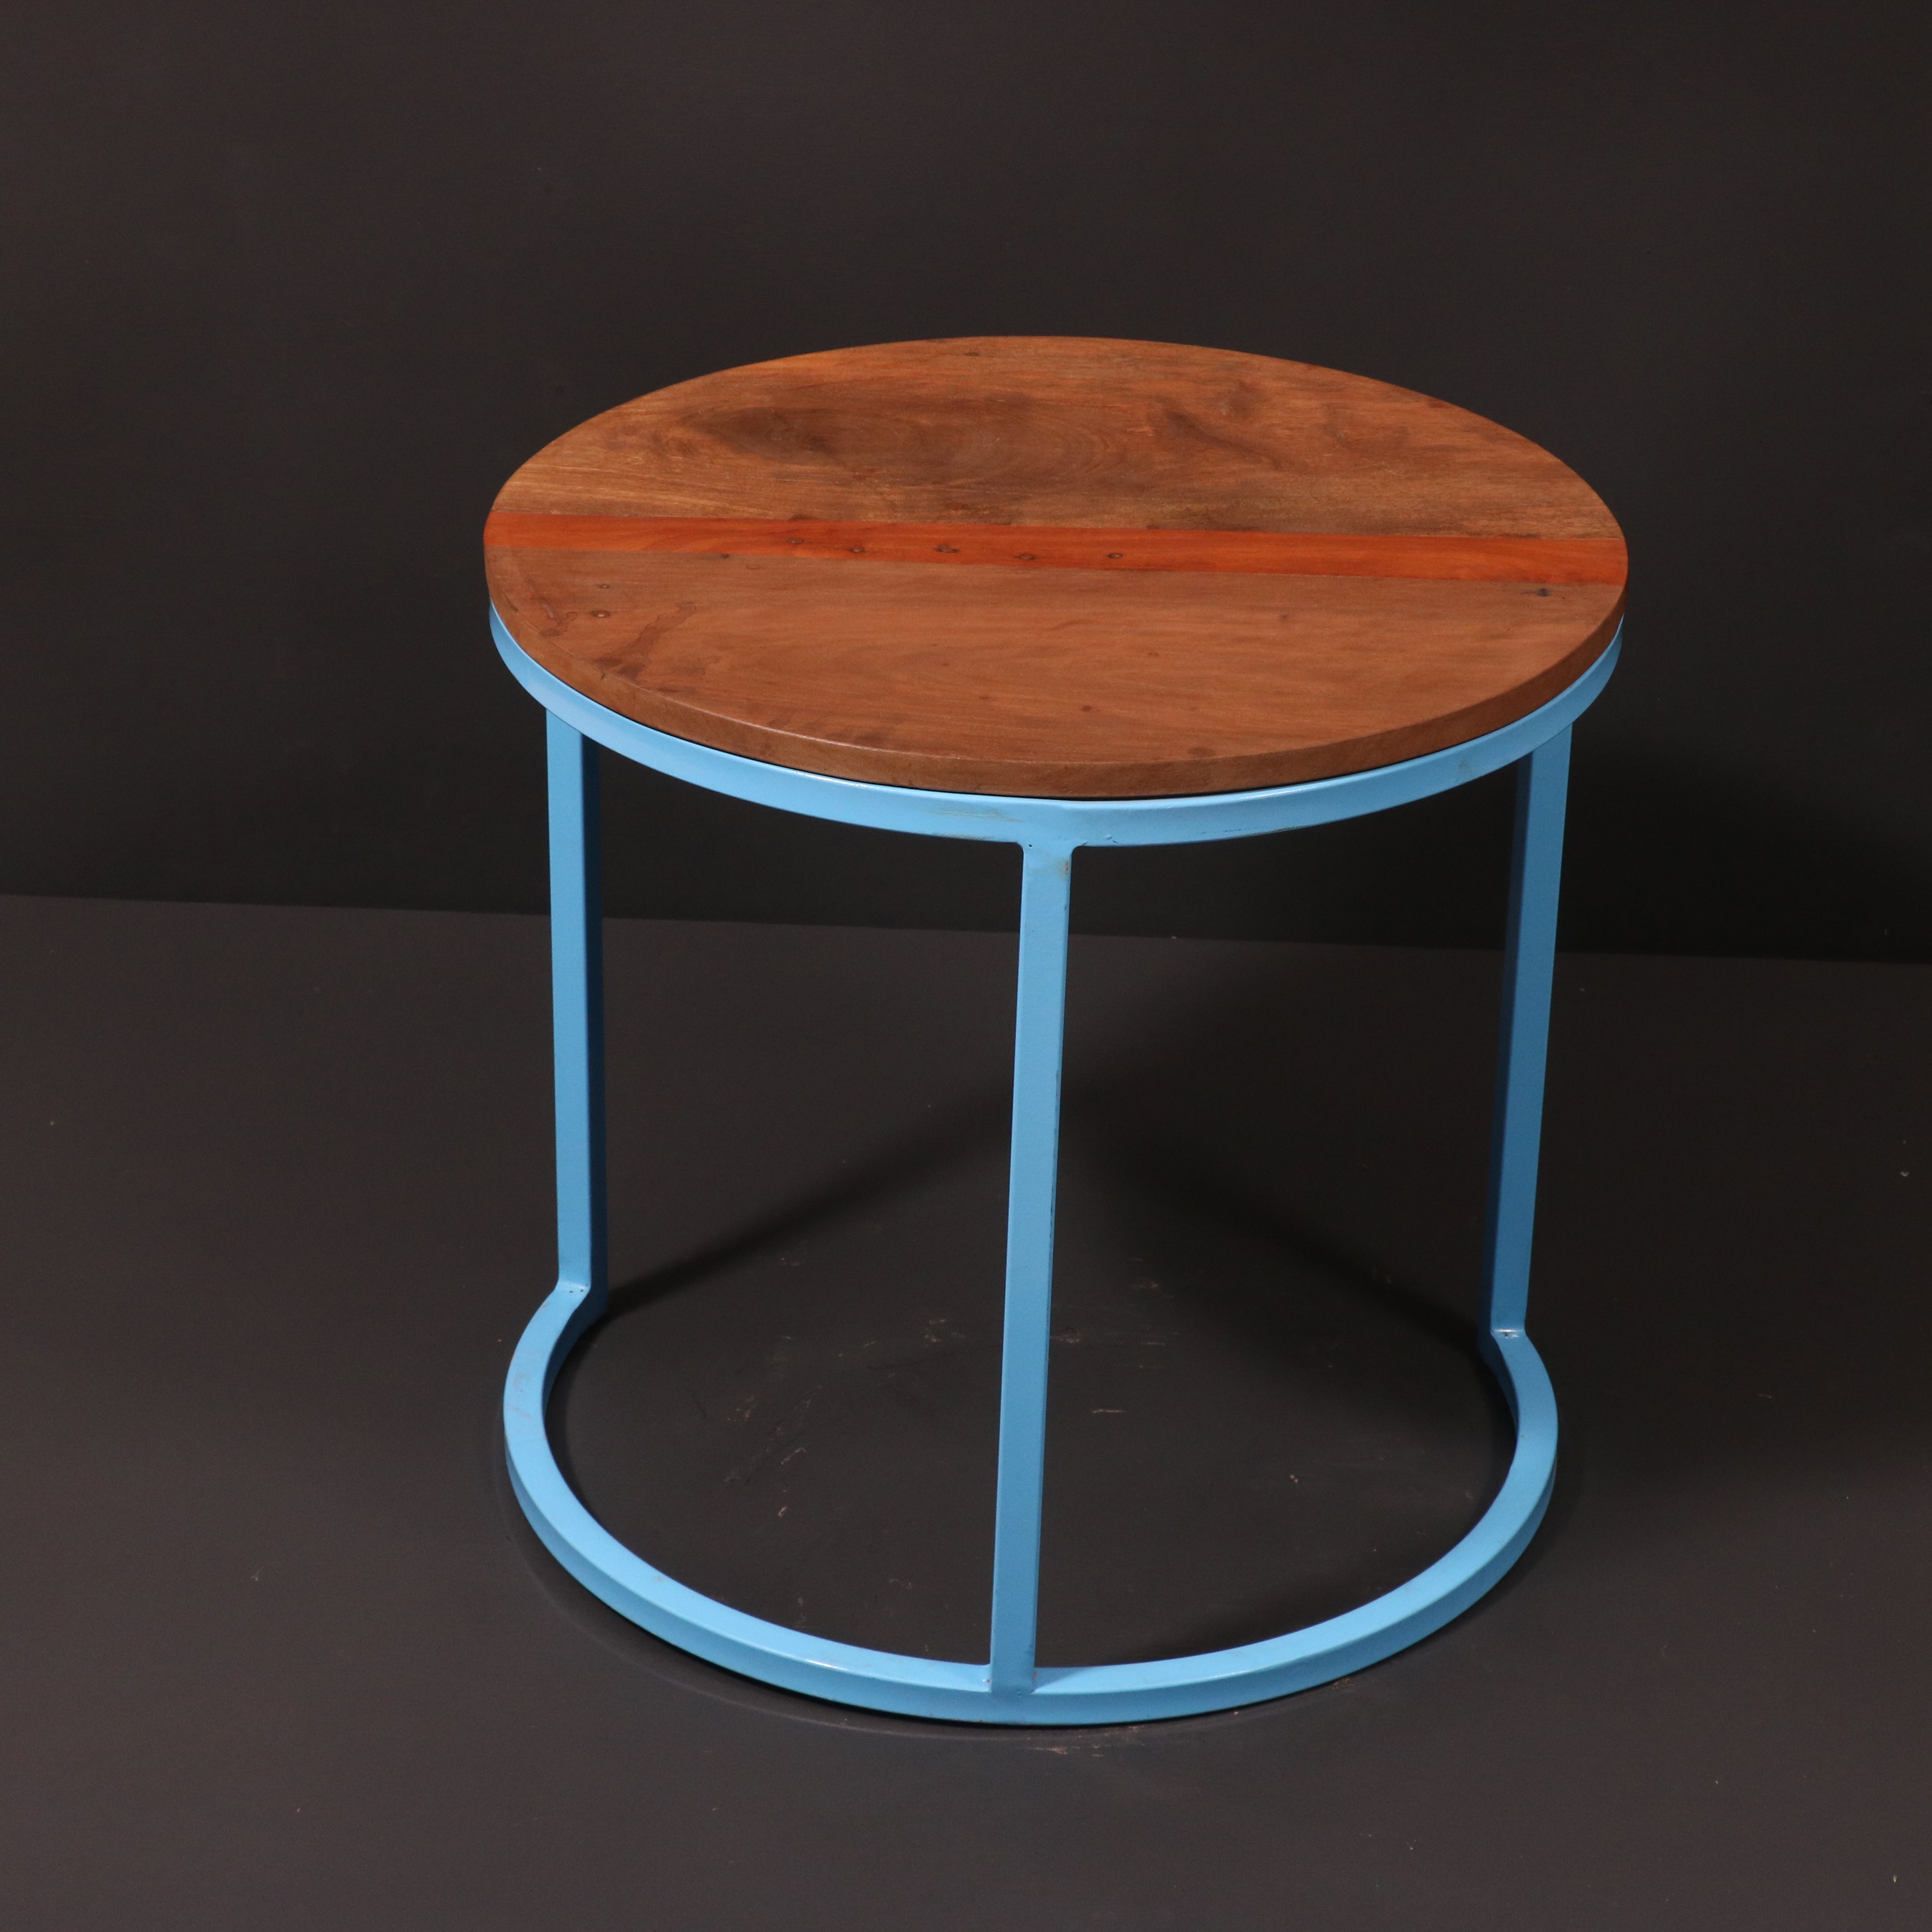 (Set of 3) Metallic Table Stand Stool